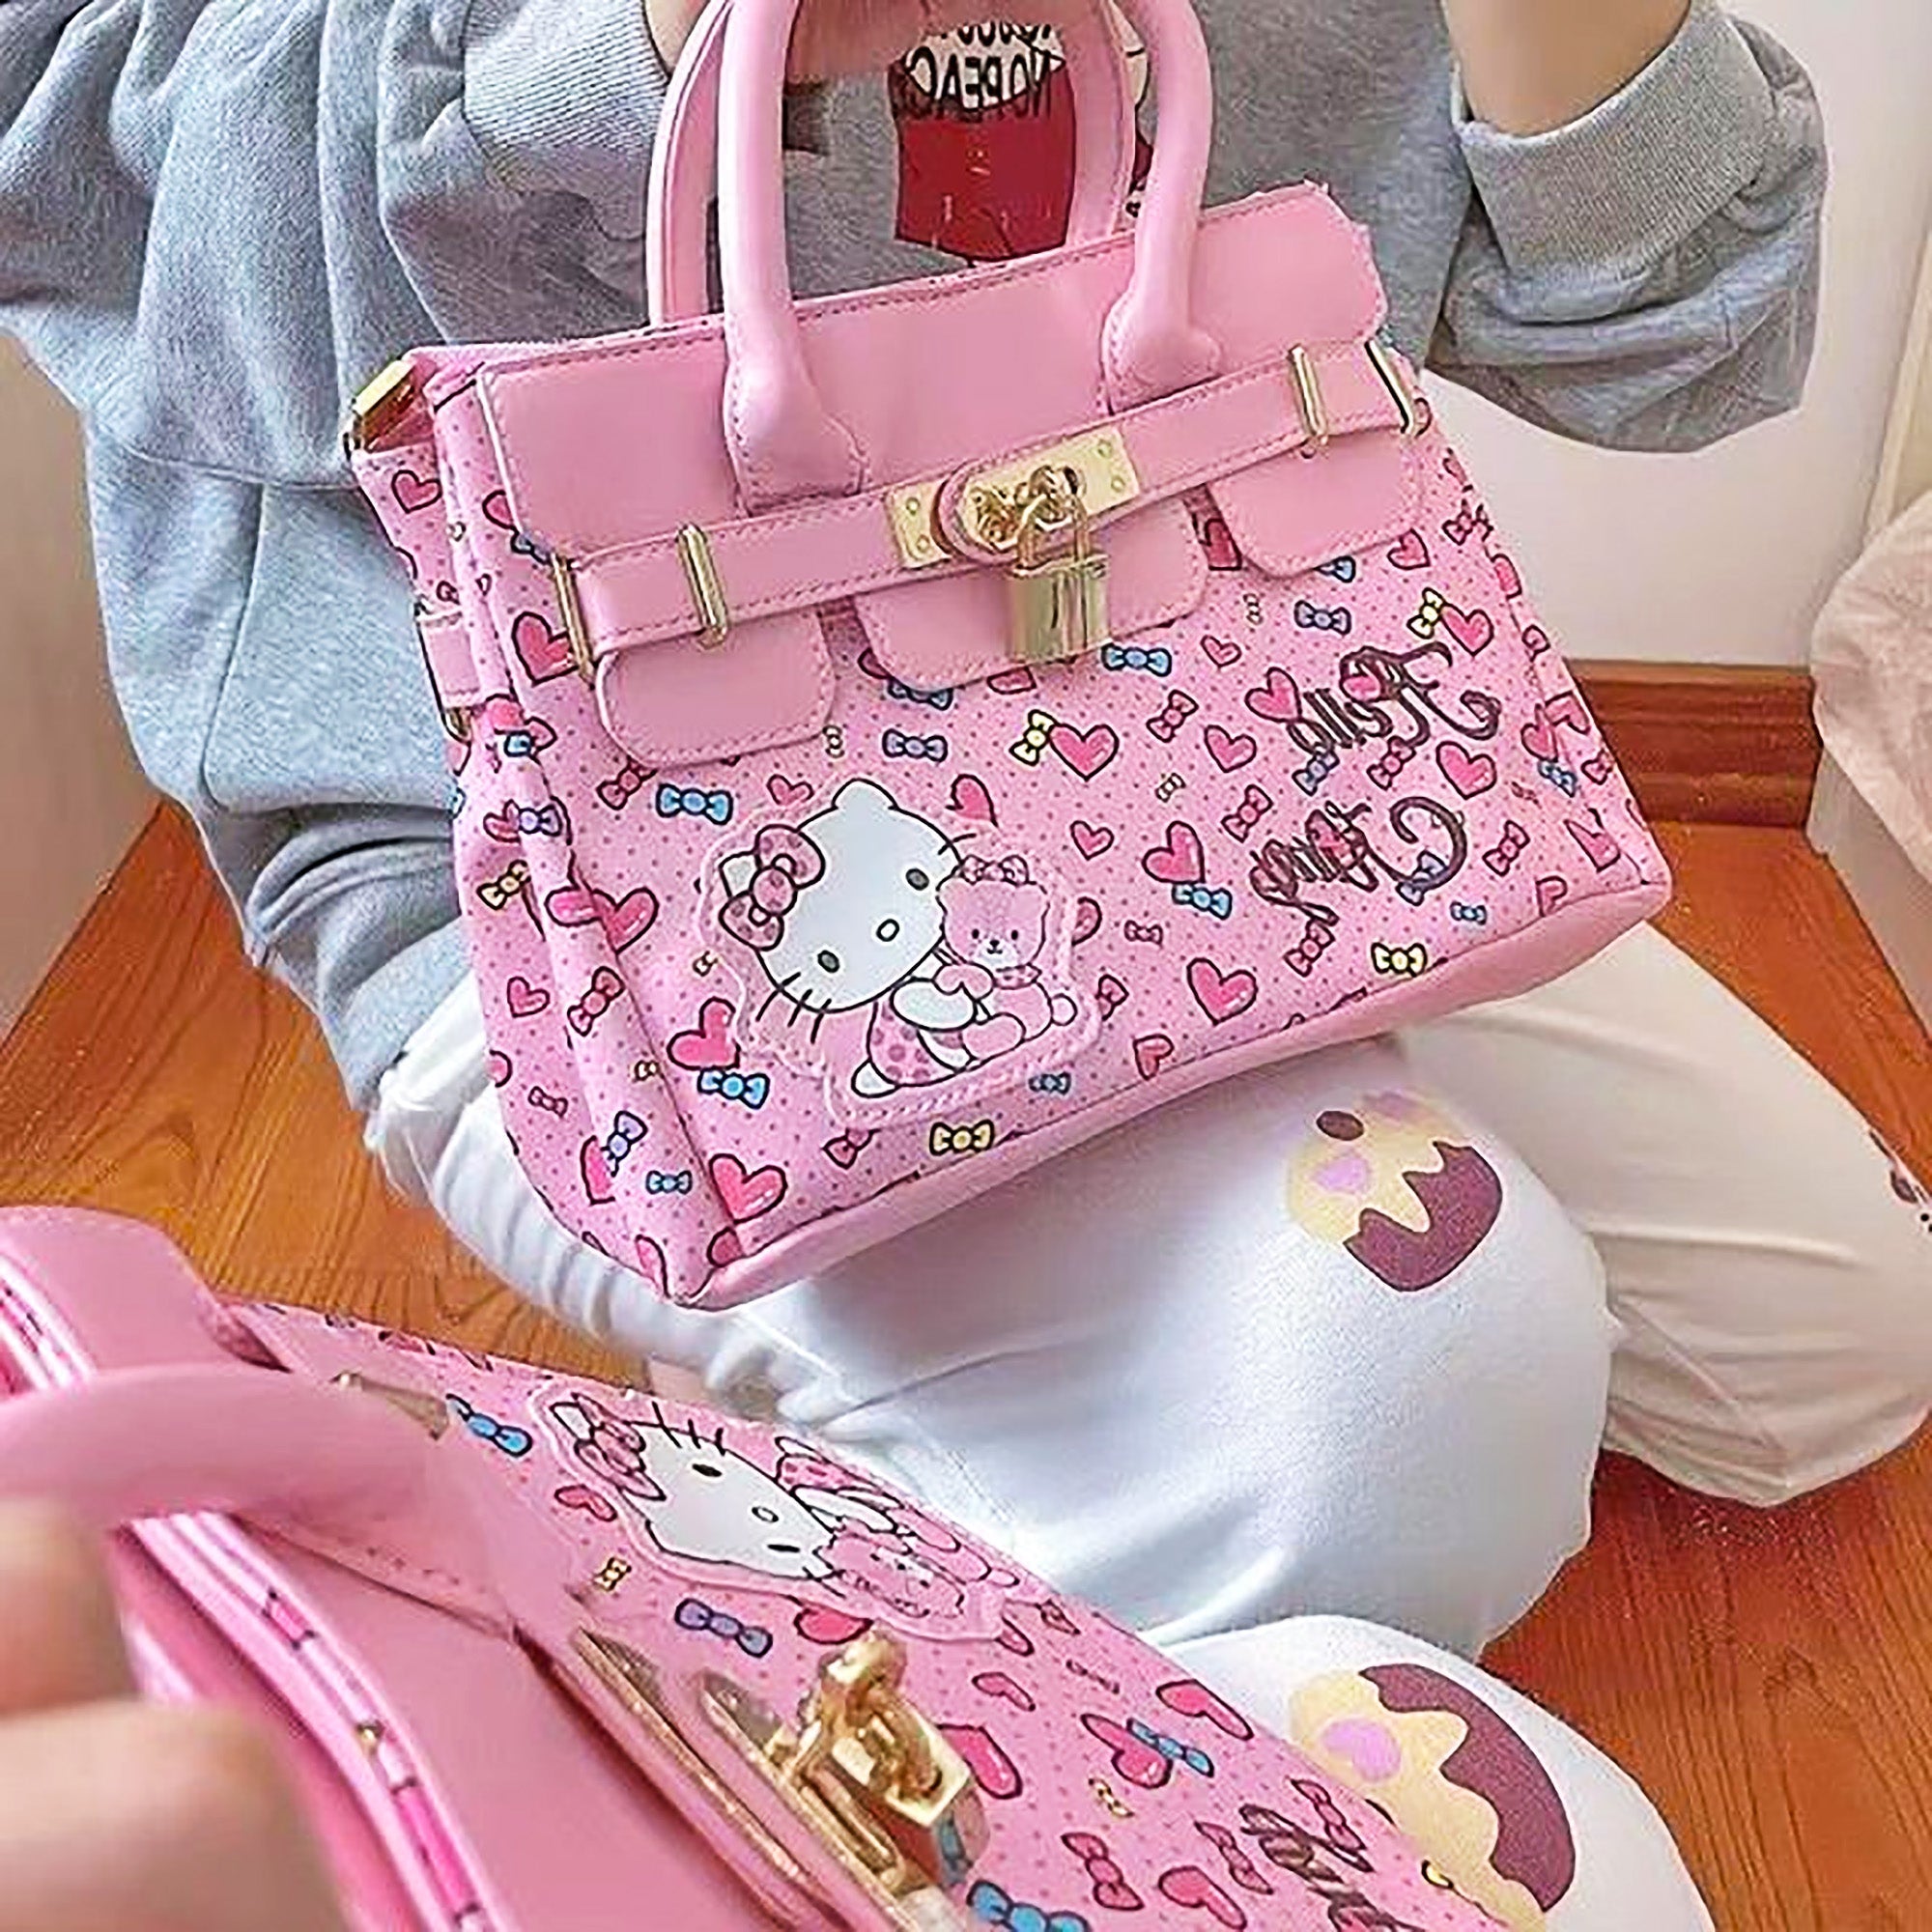 Hello Kitty, Bags, White And Pink Hello Kitty Sanrio Shoulder Bag